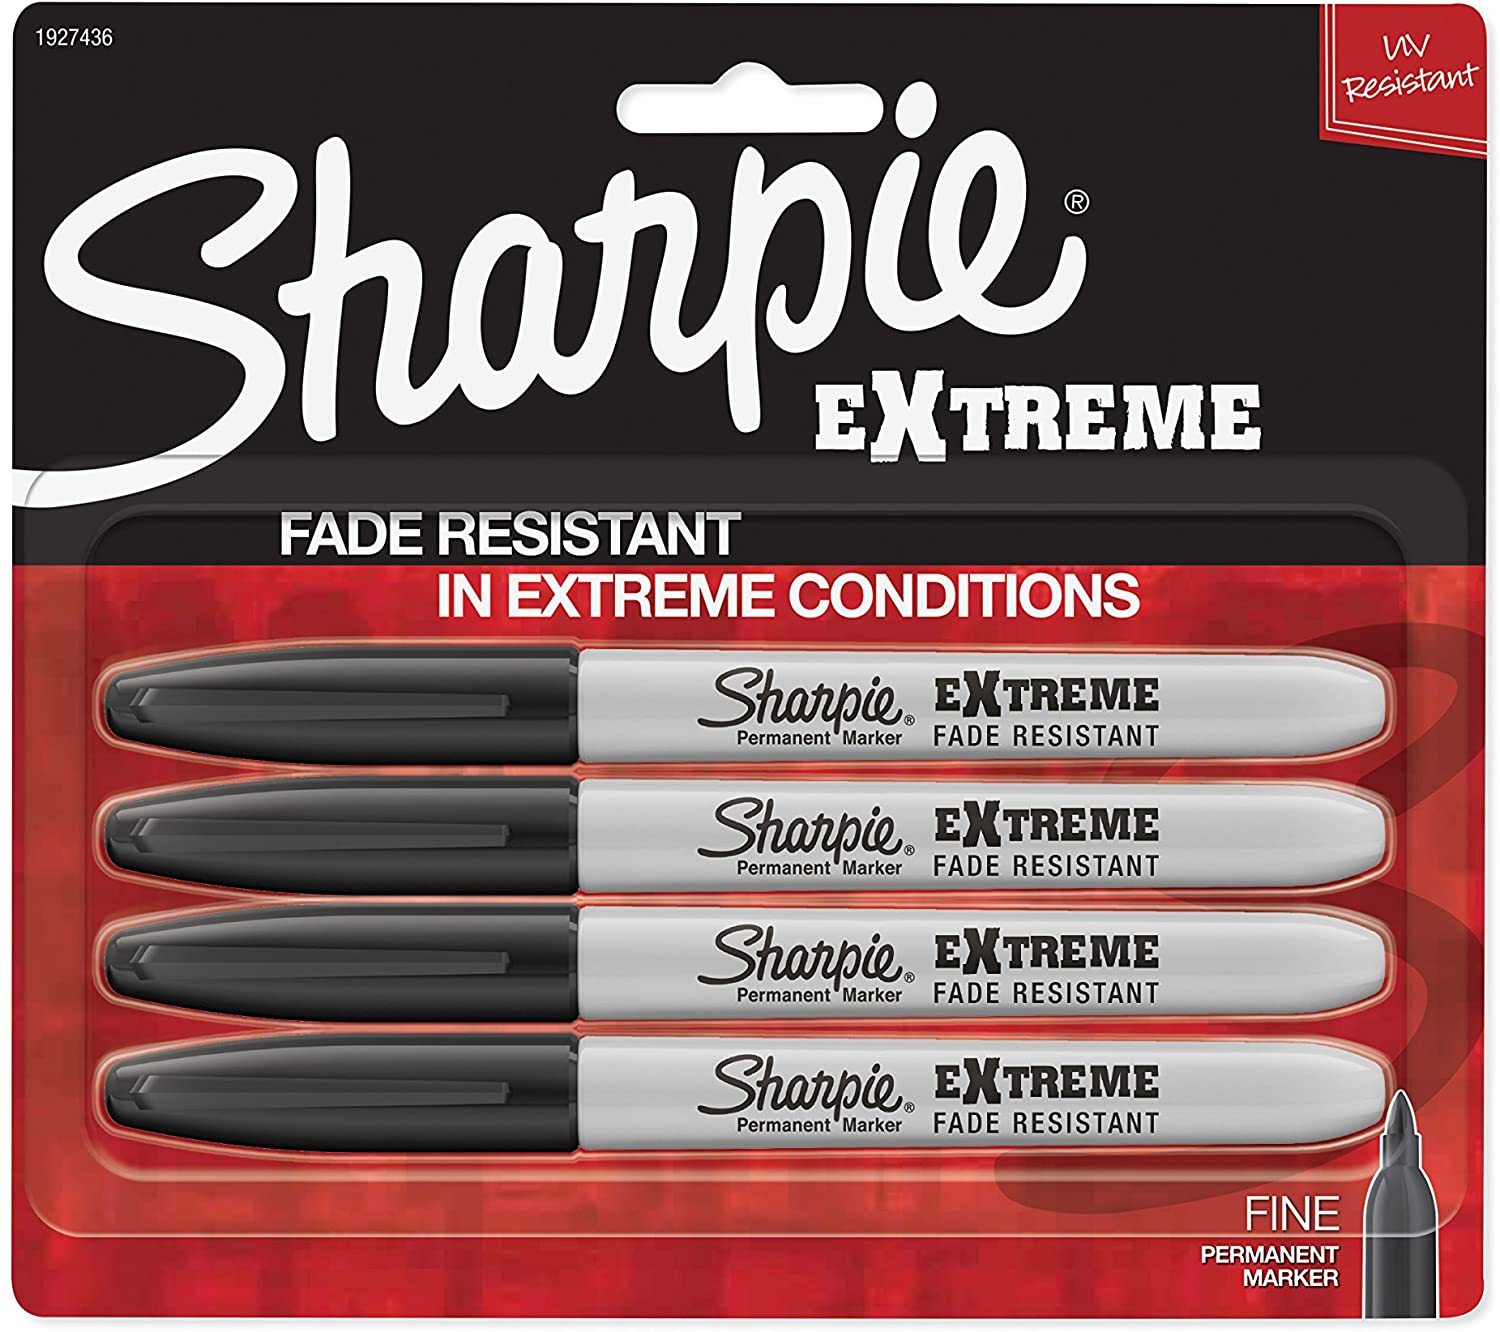 Sharpie Extreme Permanent Markers 4pk PRICE GLITCH on Amazon!